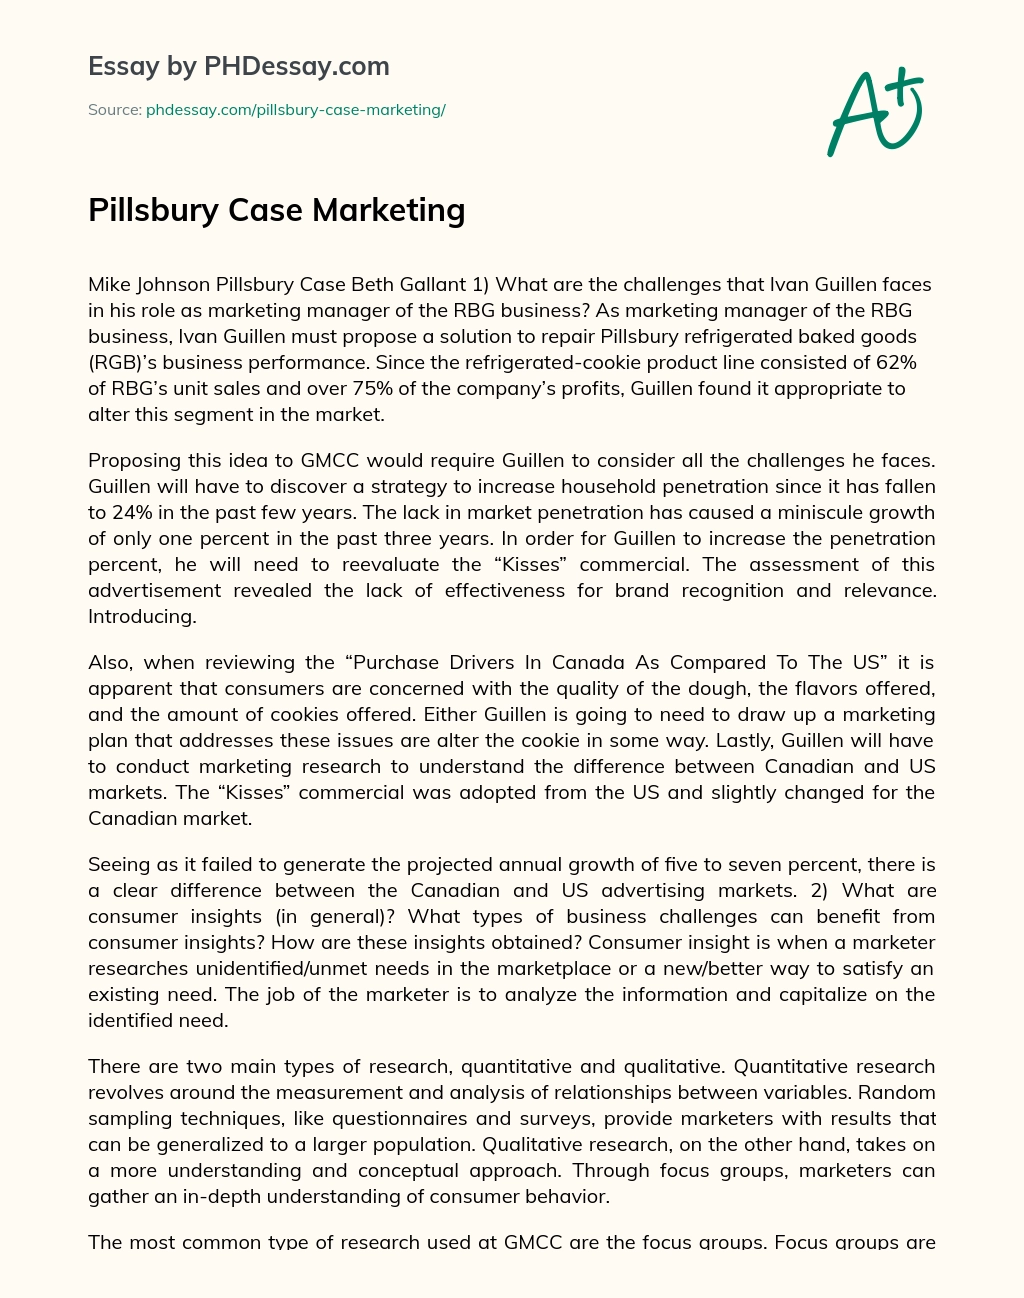 Pillsbury Case Marketing essay